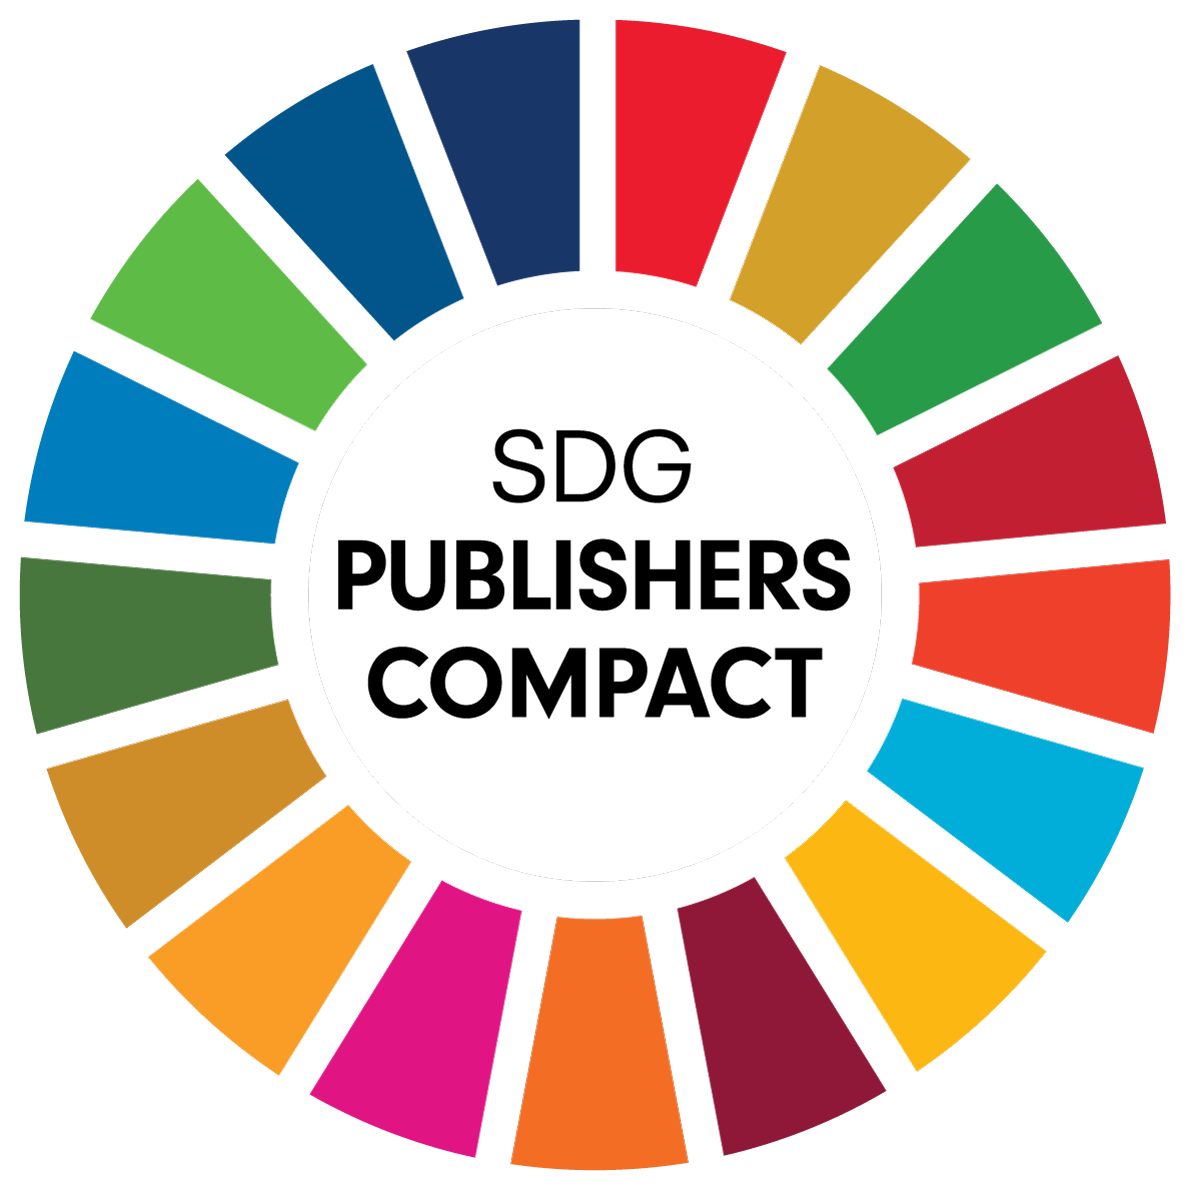 Bristol University Press becomes a signatory to the UN SDG Publishers Compact